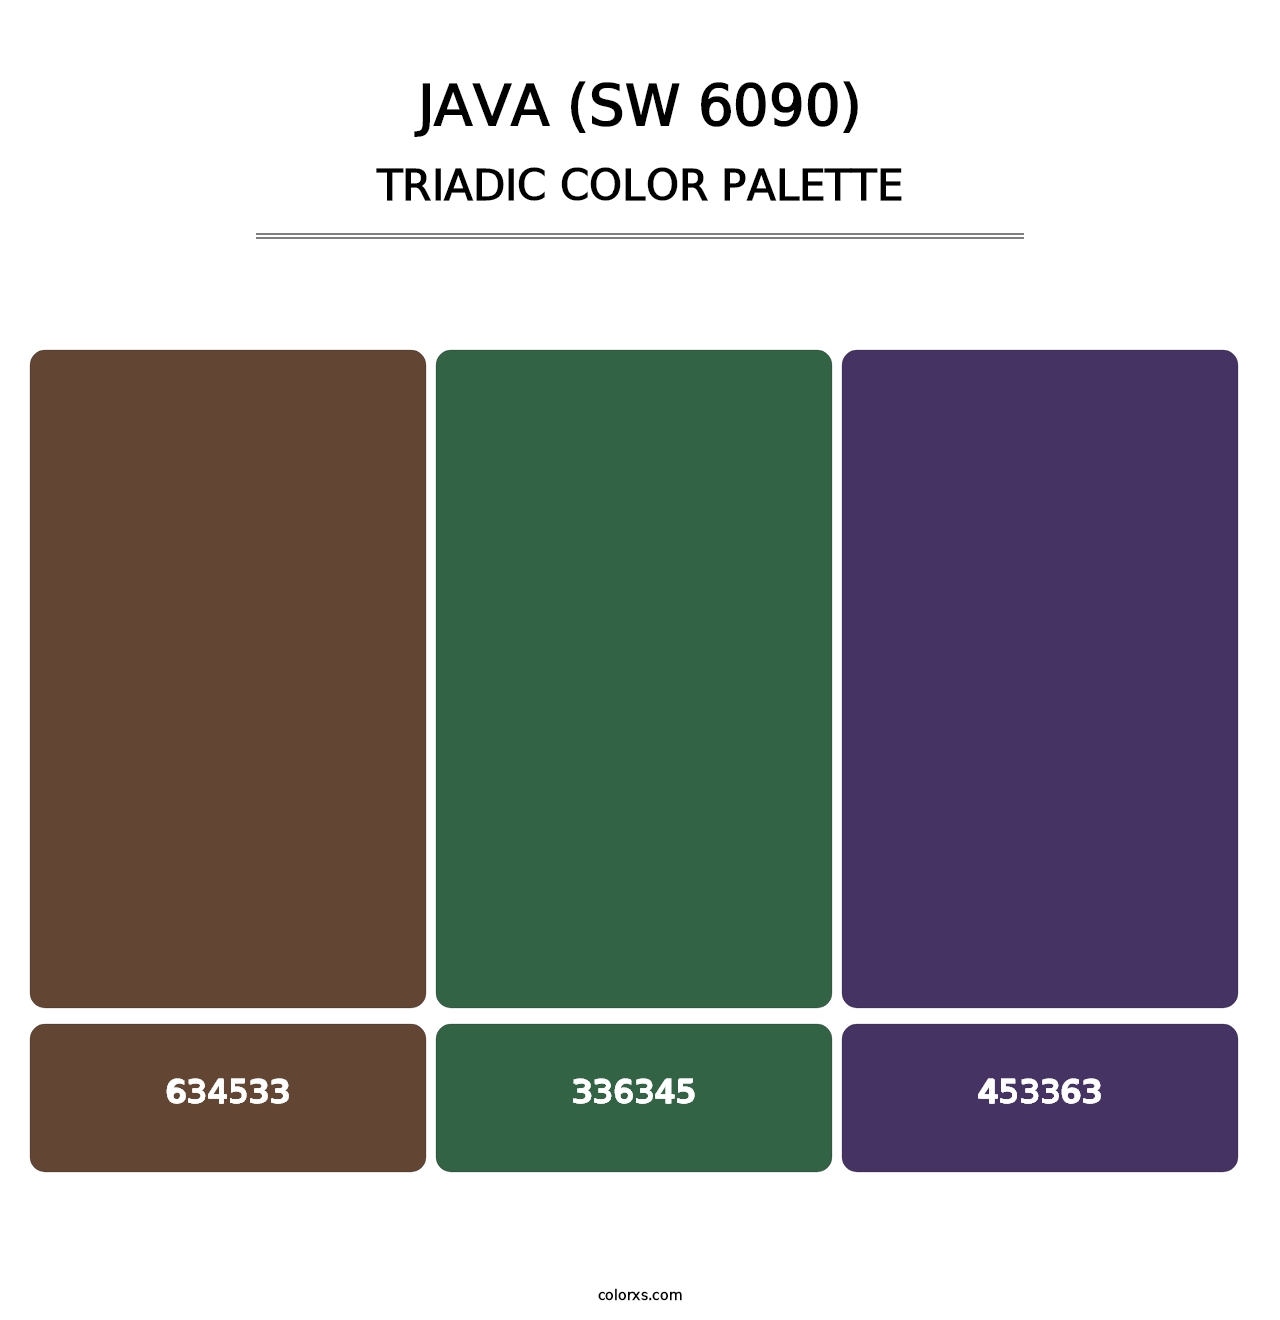 Java (SW 6090) - Triadic Color Palette